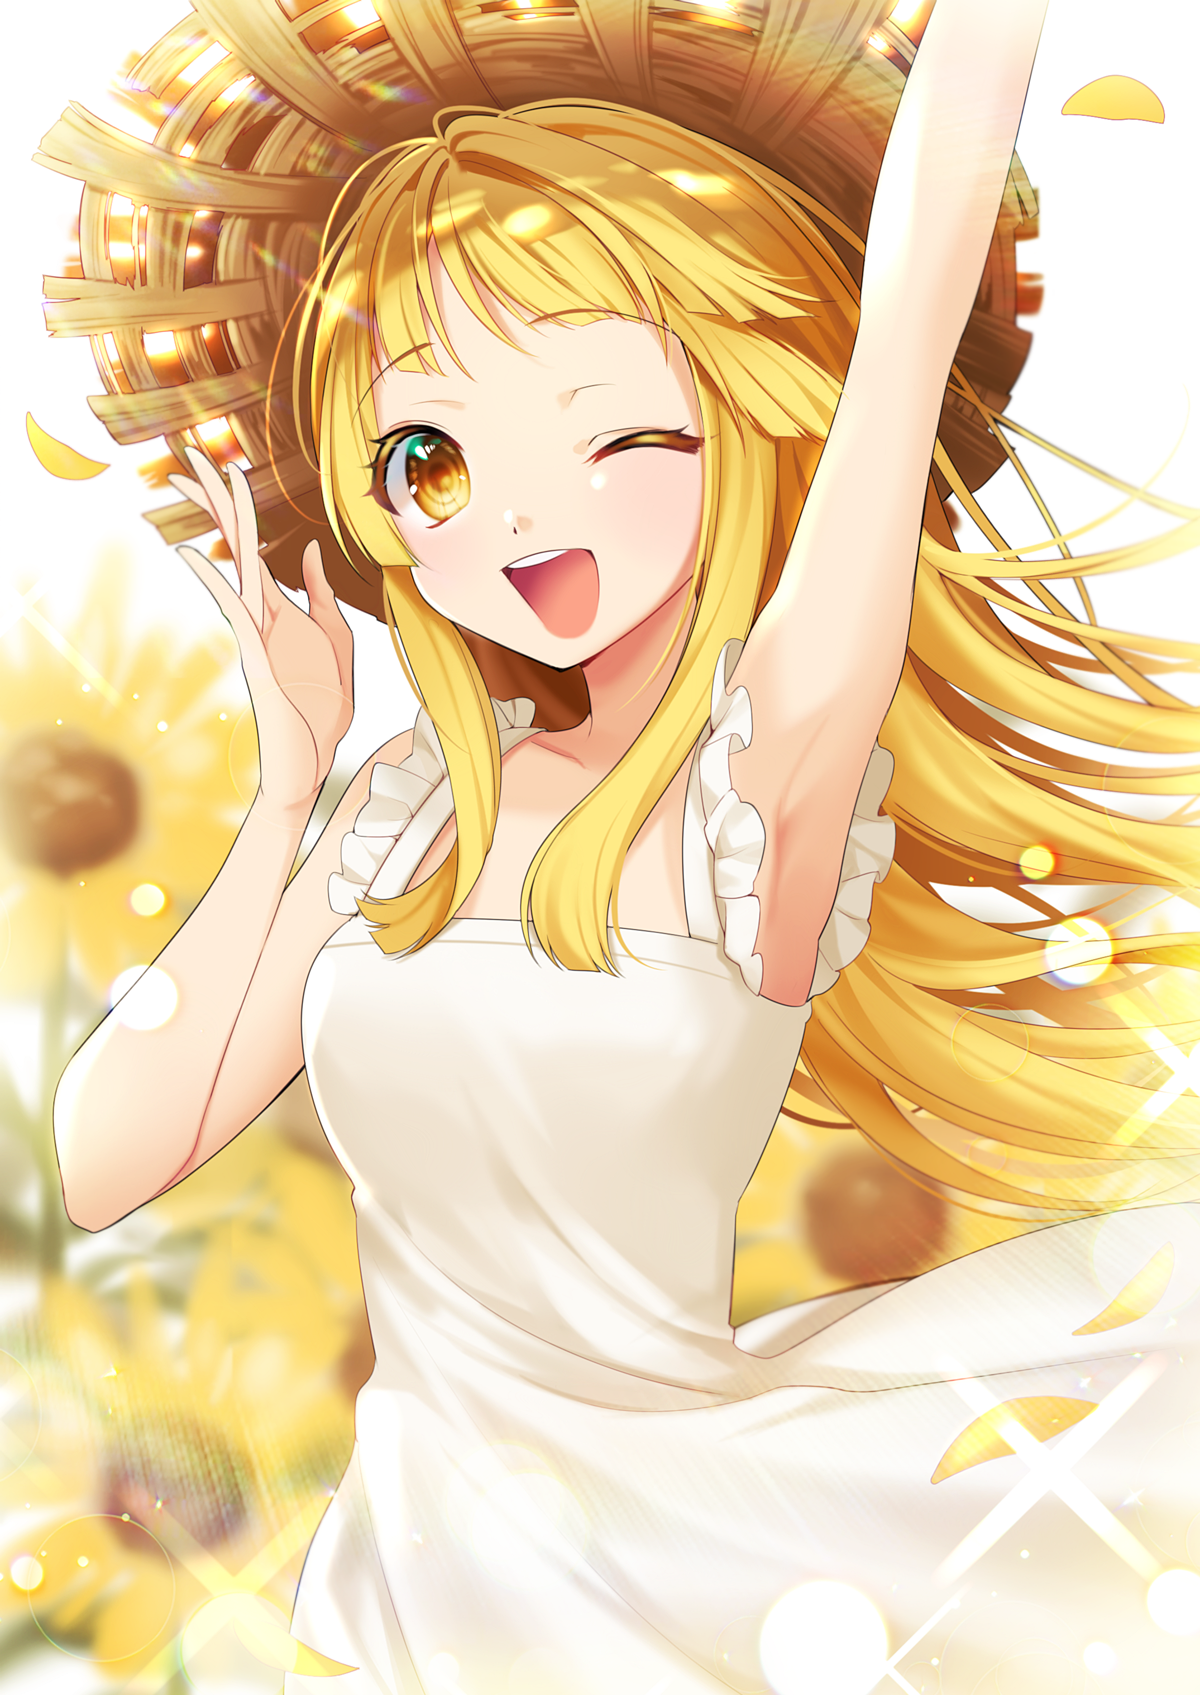 Anime 1200x1695 anime anime girls digital art artwork portrait display 2D MiNORi (artist) blonde long hair yellow eyes wink straw hat dress sun dress sunflowers